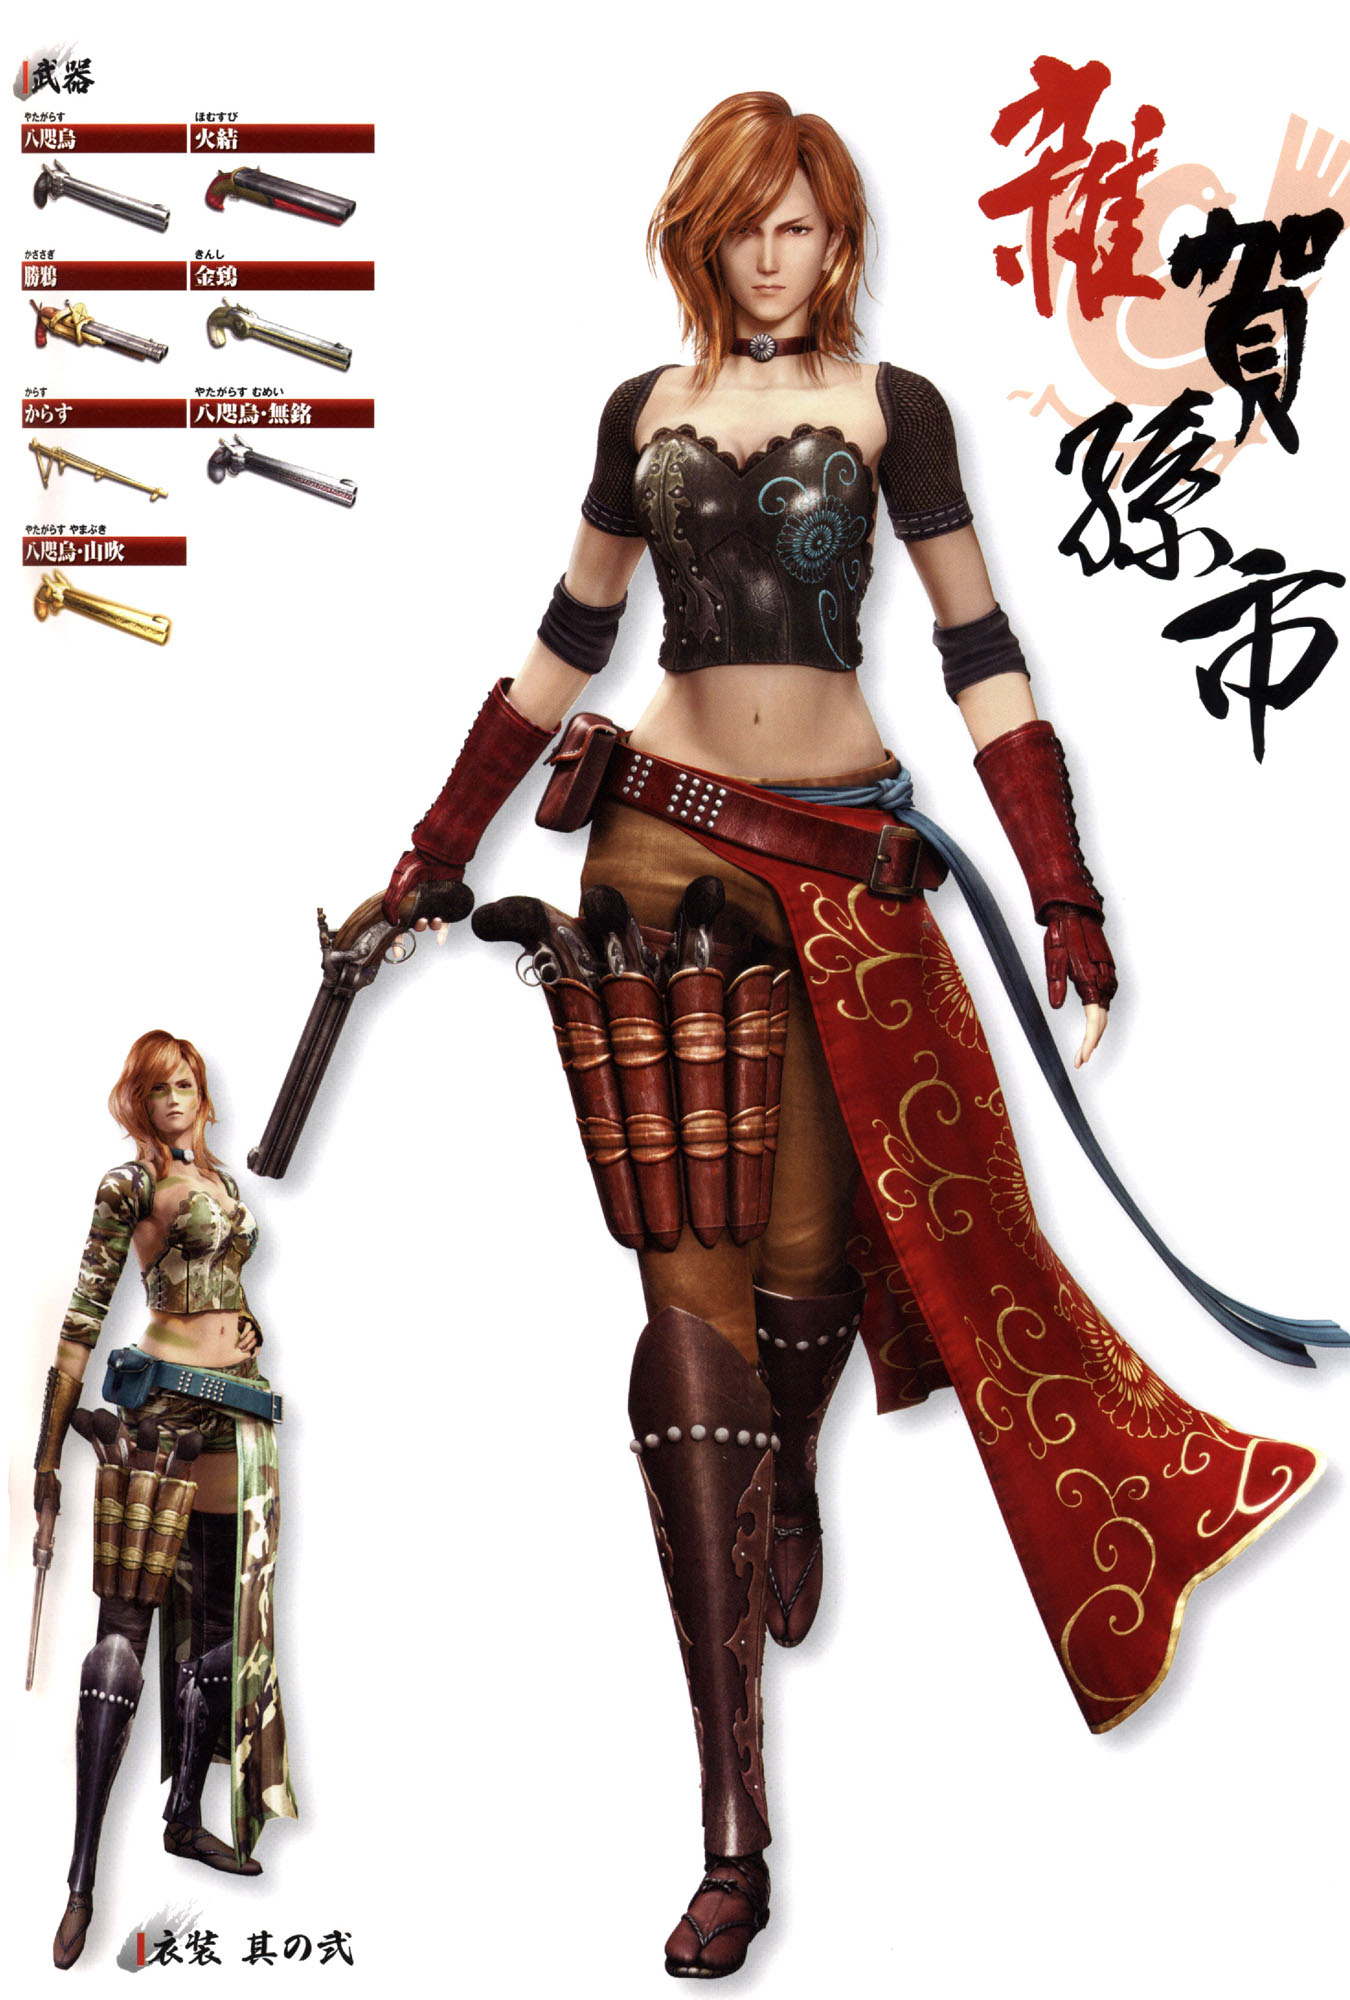 Magoichi Saika SB3 with alternate costume and weapons